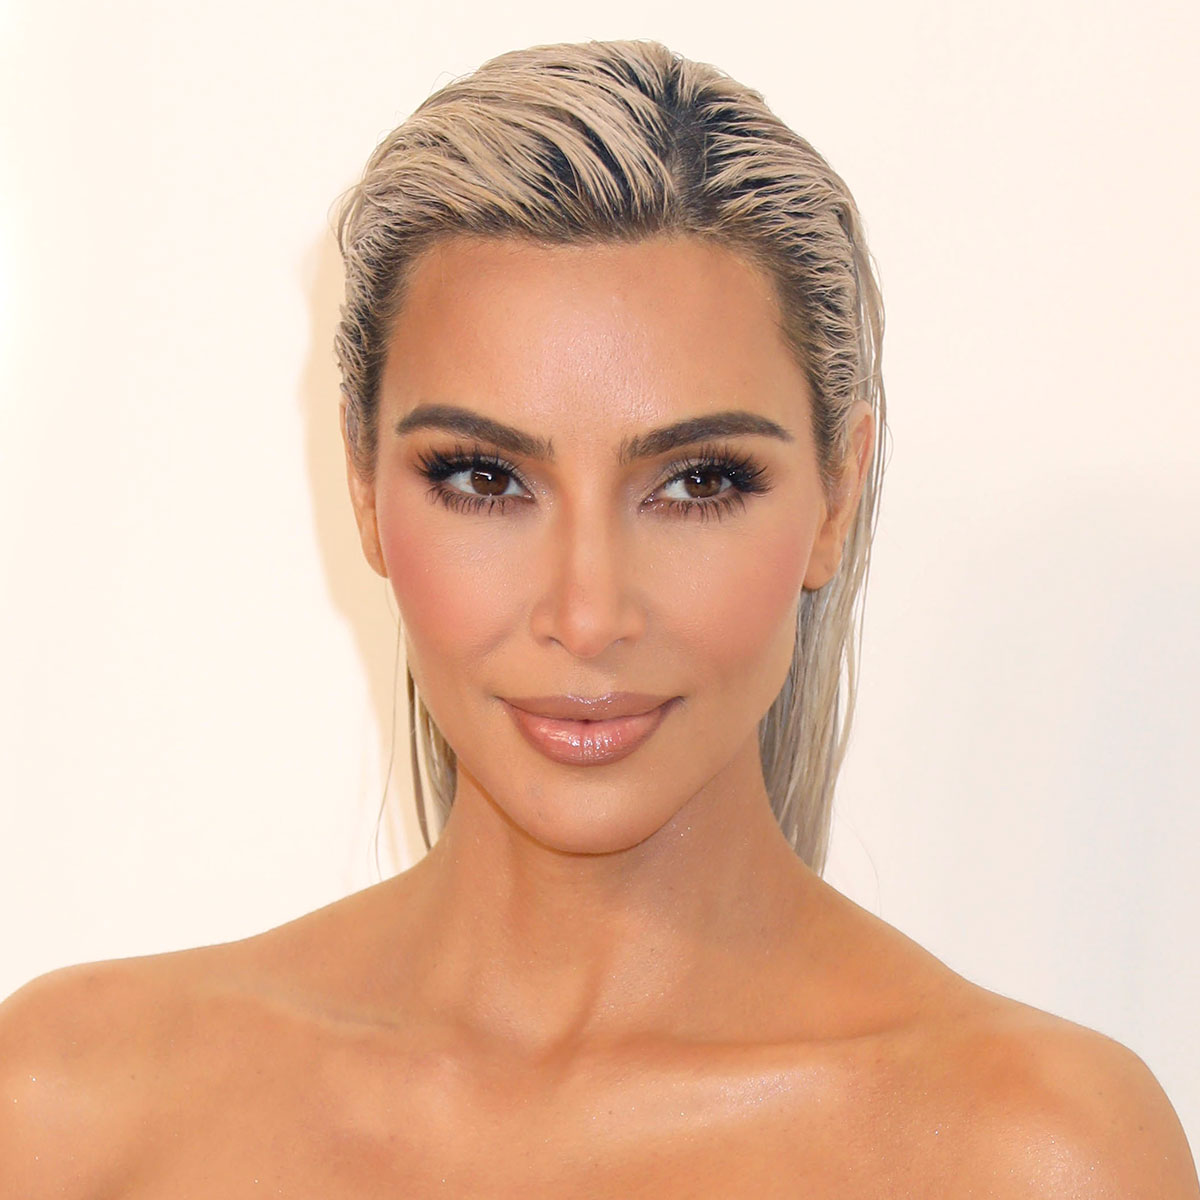 Kim Kardashian Shows Off Her New Flattering Hairstyle On Instagram